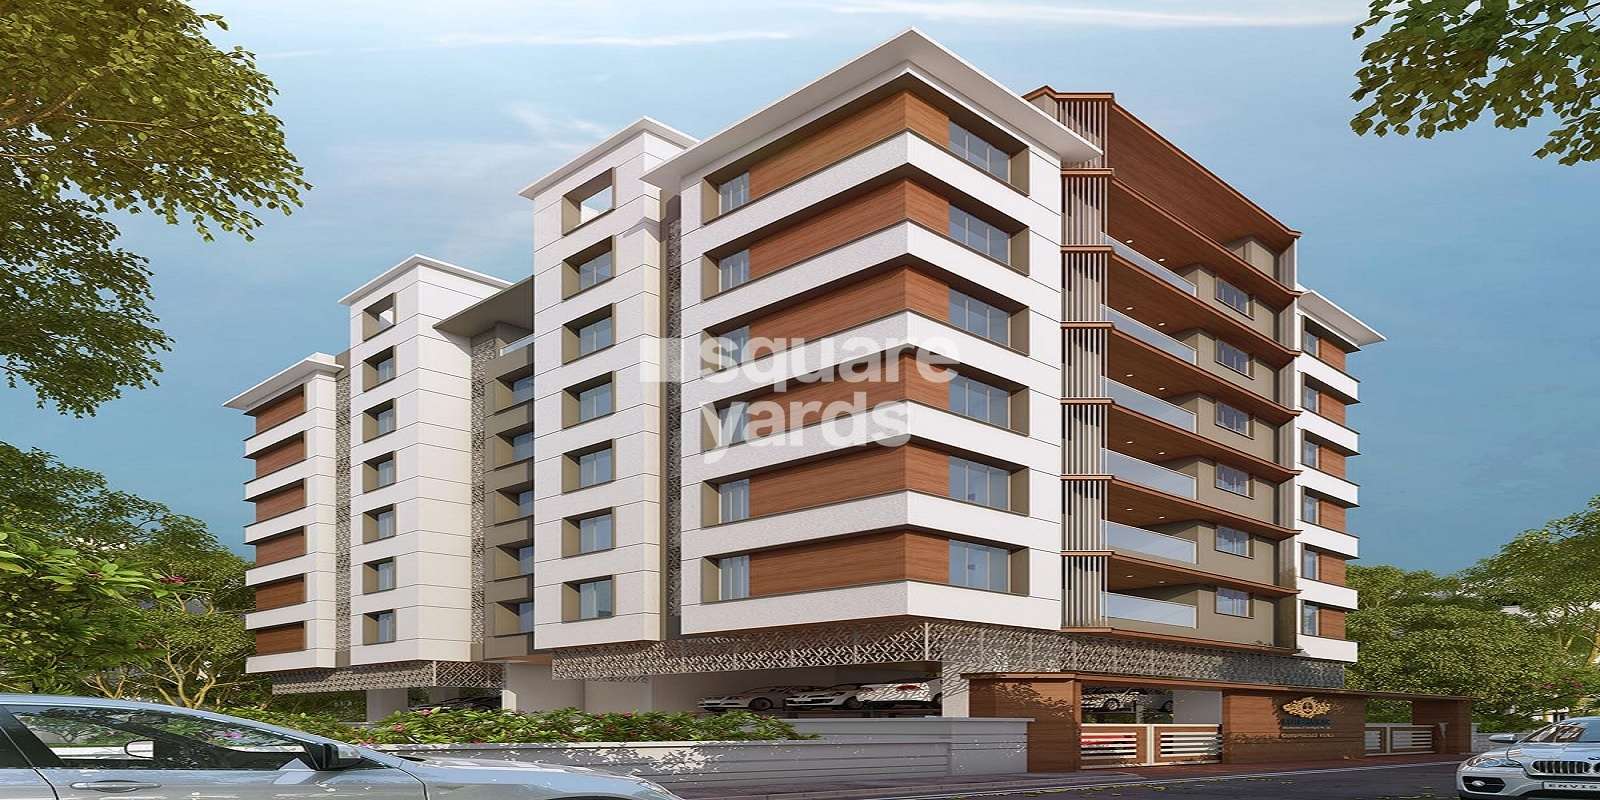 Guruprasad Kunj Apartment Cover Image